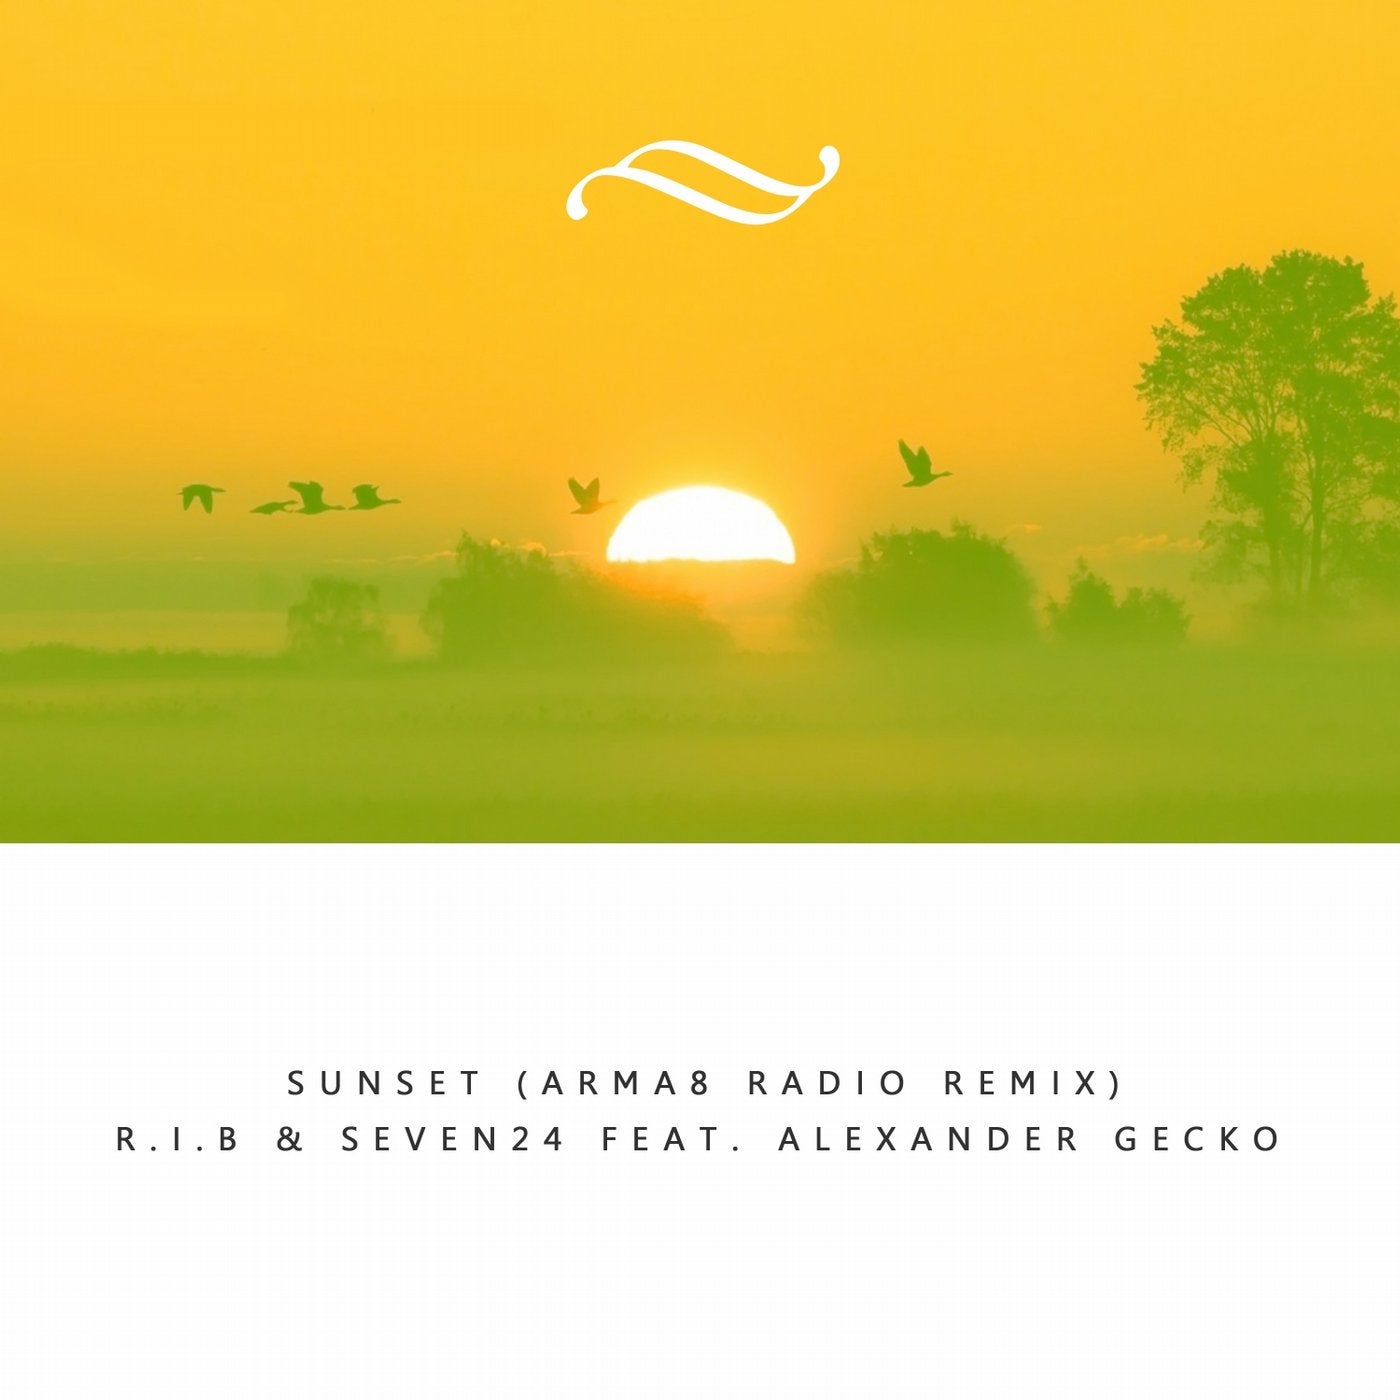 Sunset (Arma8 Radio Mix)